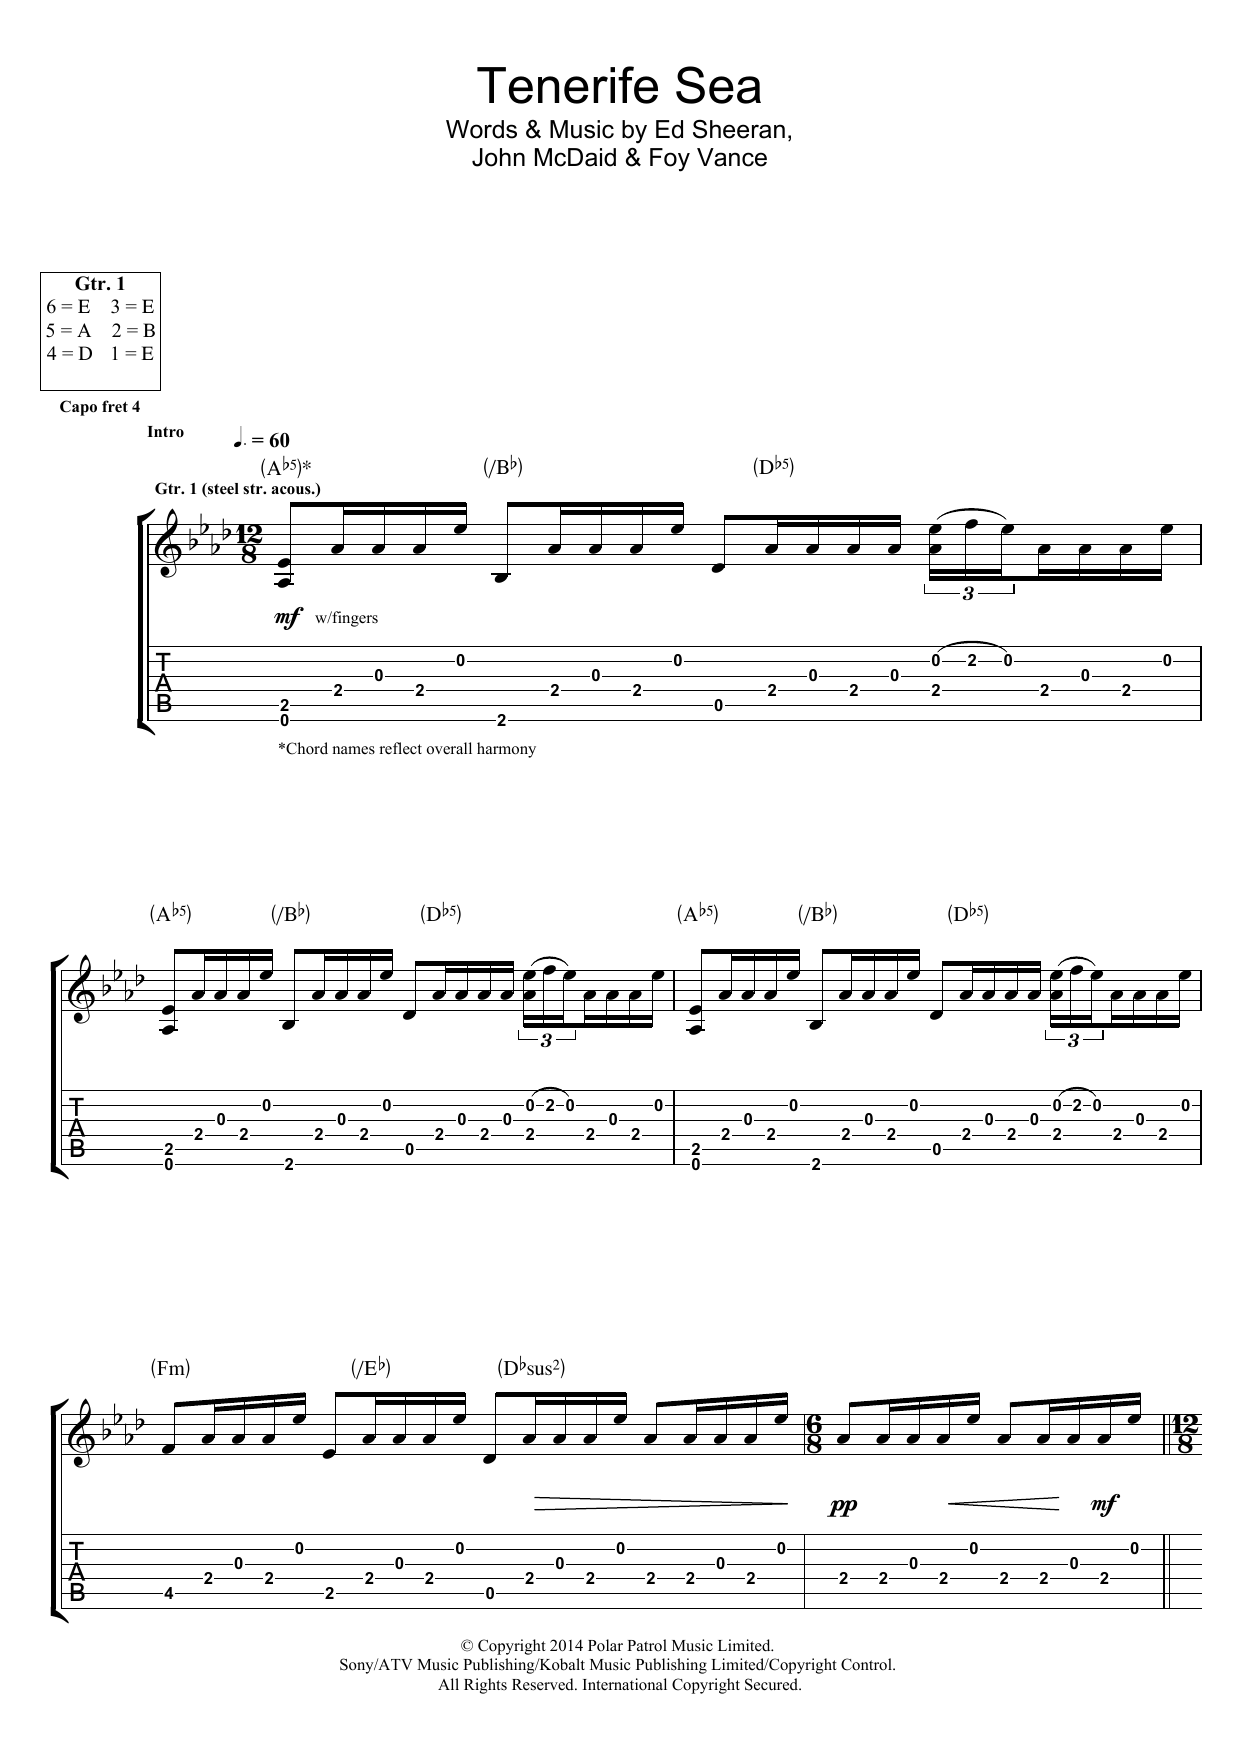 Download Ed Sheeran Tenerife Sea Sheet Music and learn how to play Beginner Piano PDF digital score in minutes